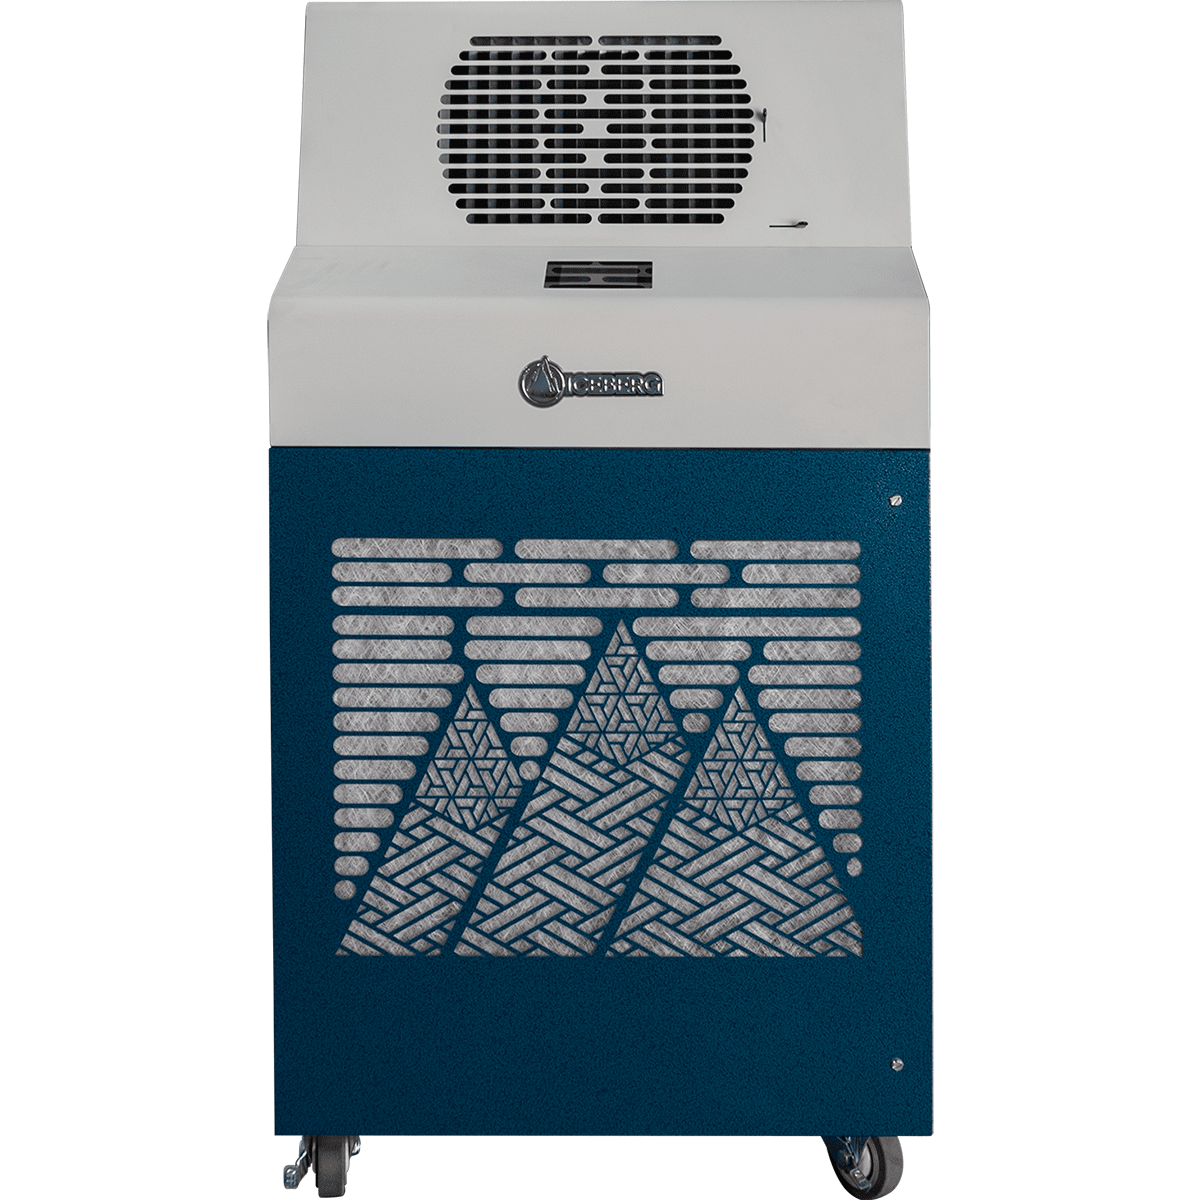 KwiKool KIB6021 60,000 BTU Portable Air Conditioner